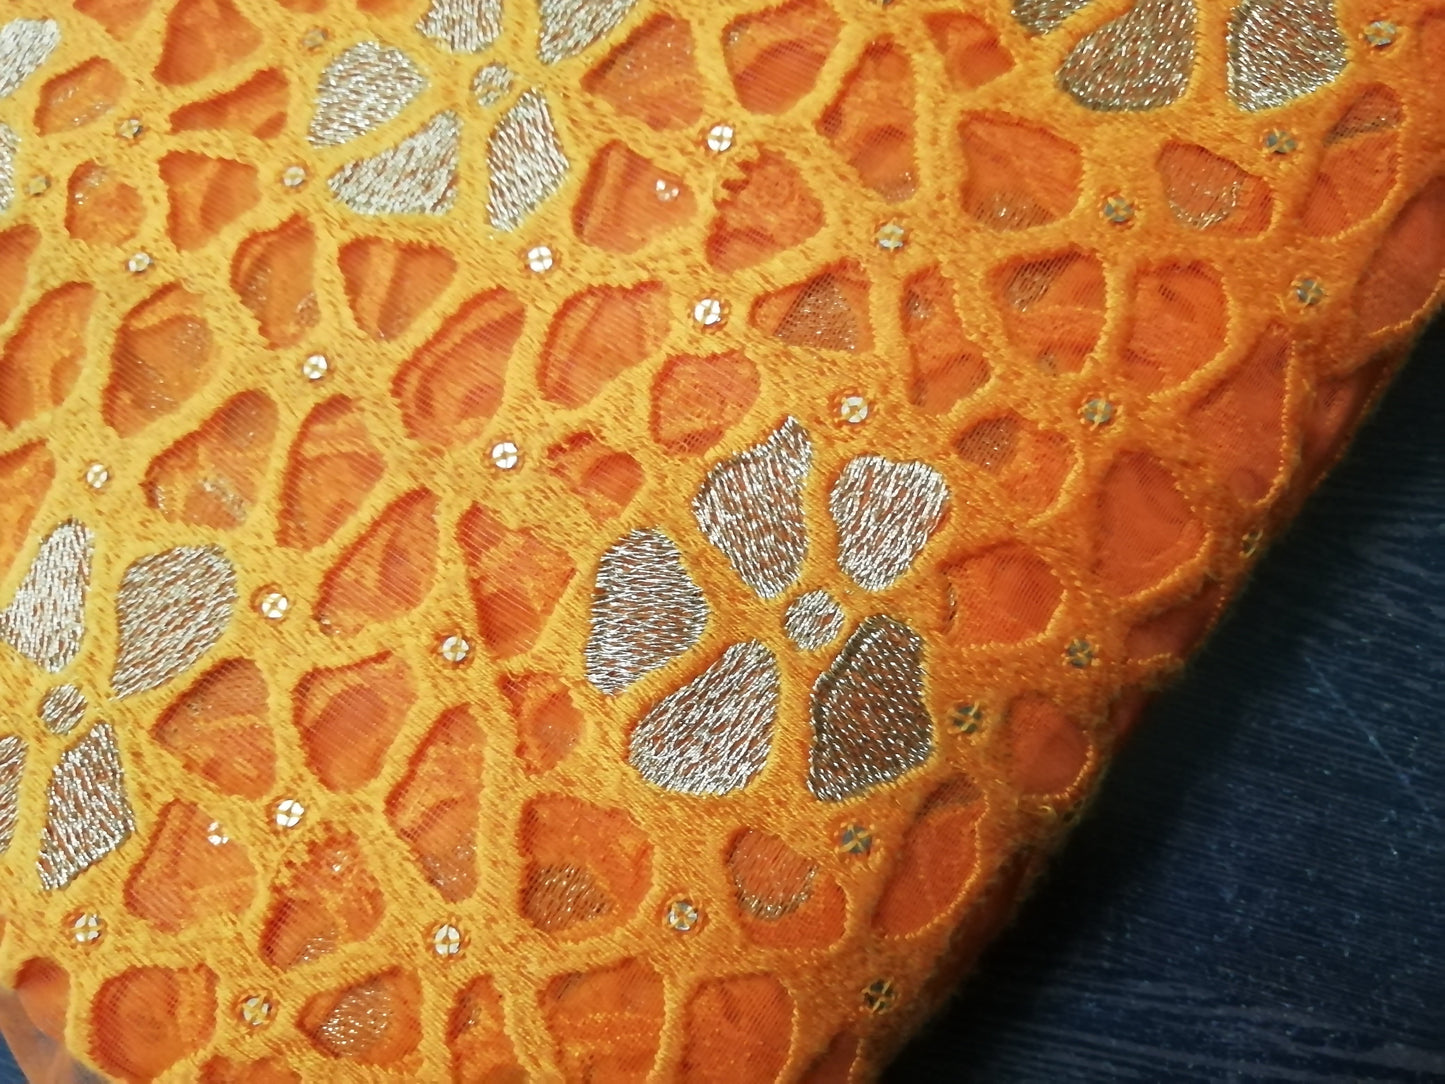 Orange &gold heavy embroidery mosaic pattern fabric - STUDIO PEHEL 